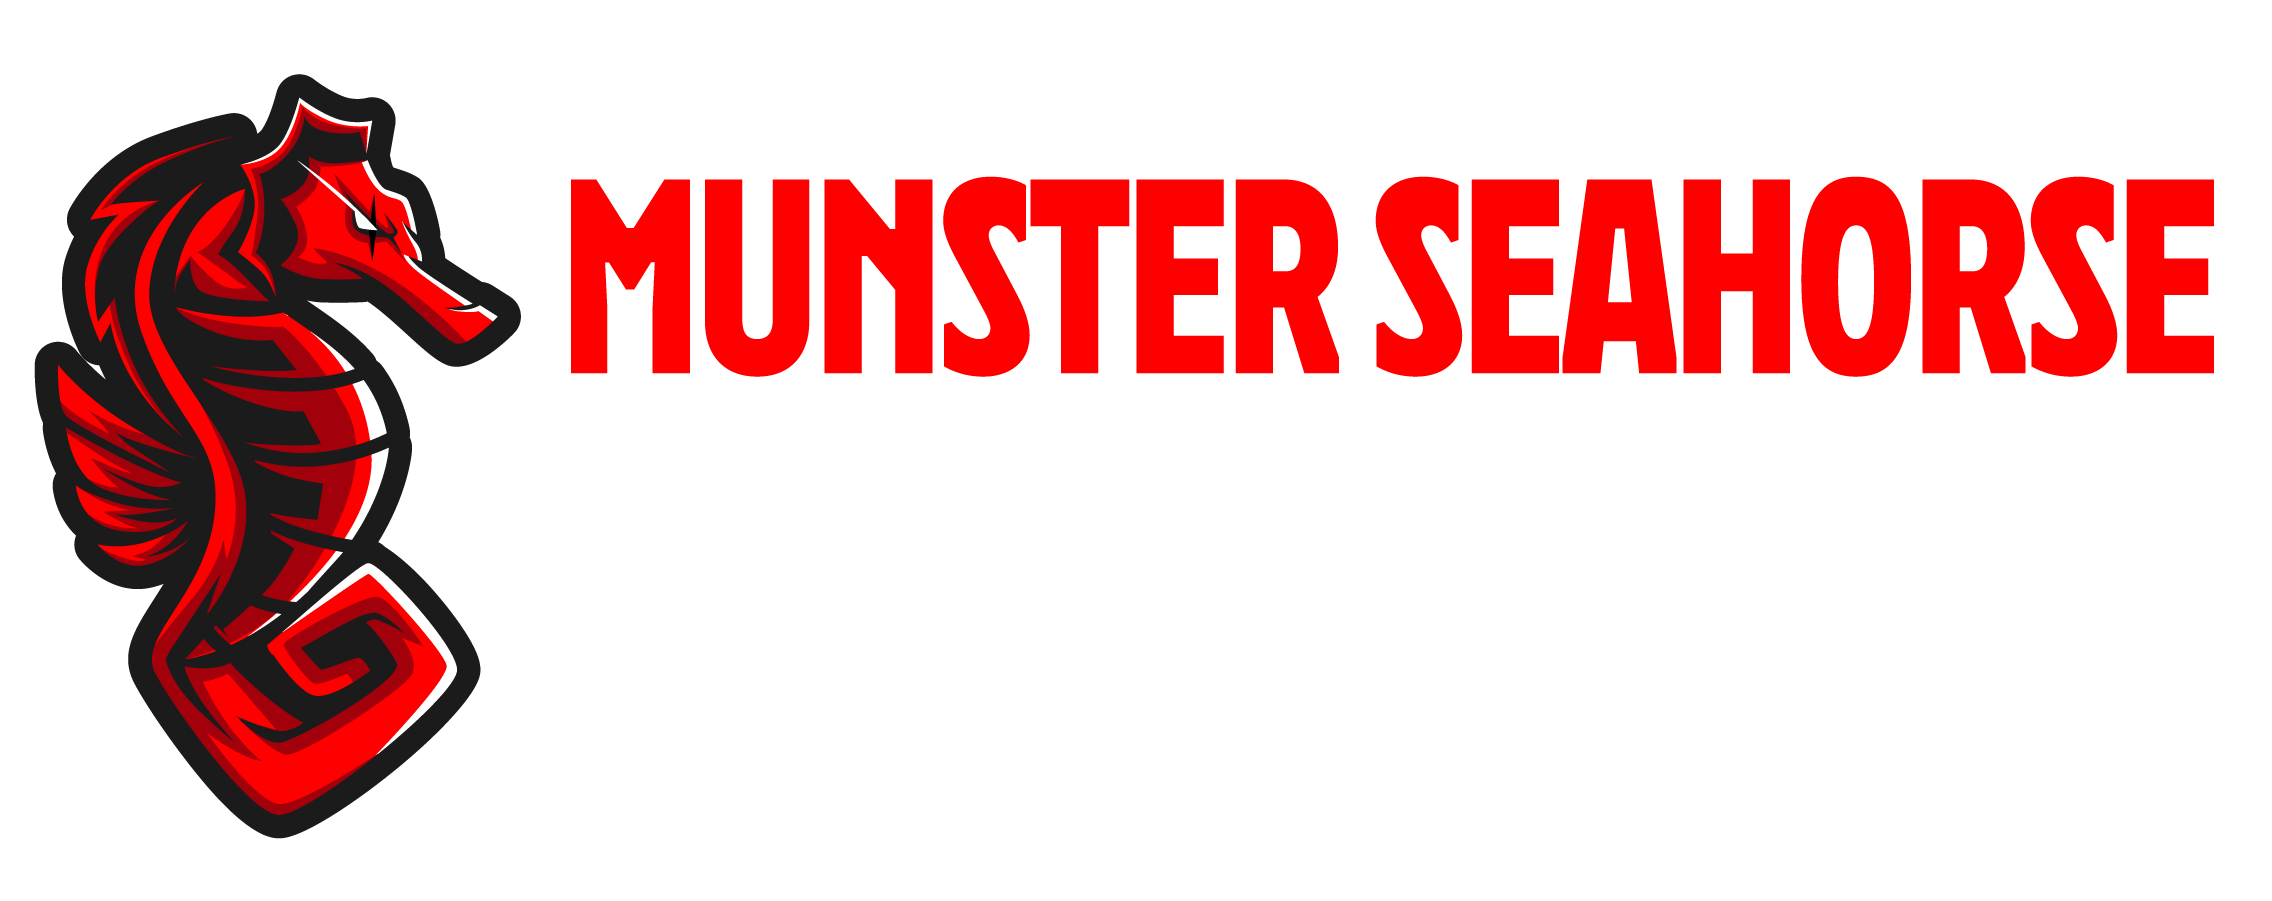 Munster Seahorse Diving Club